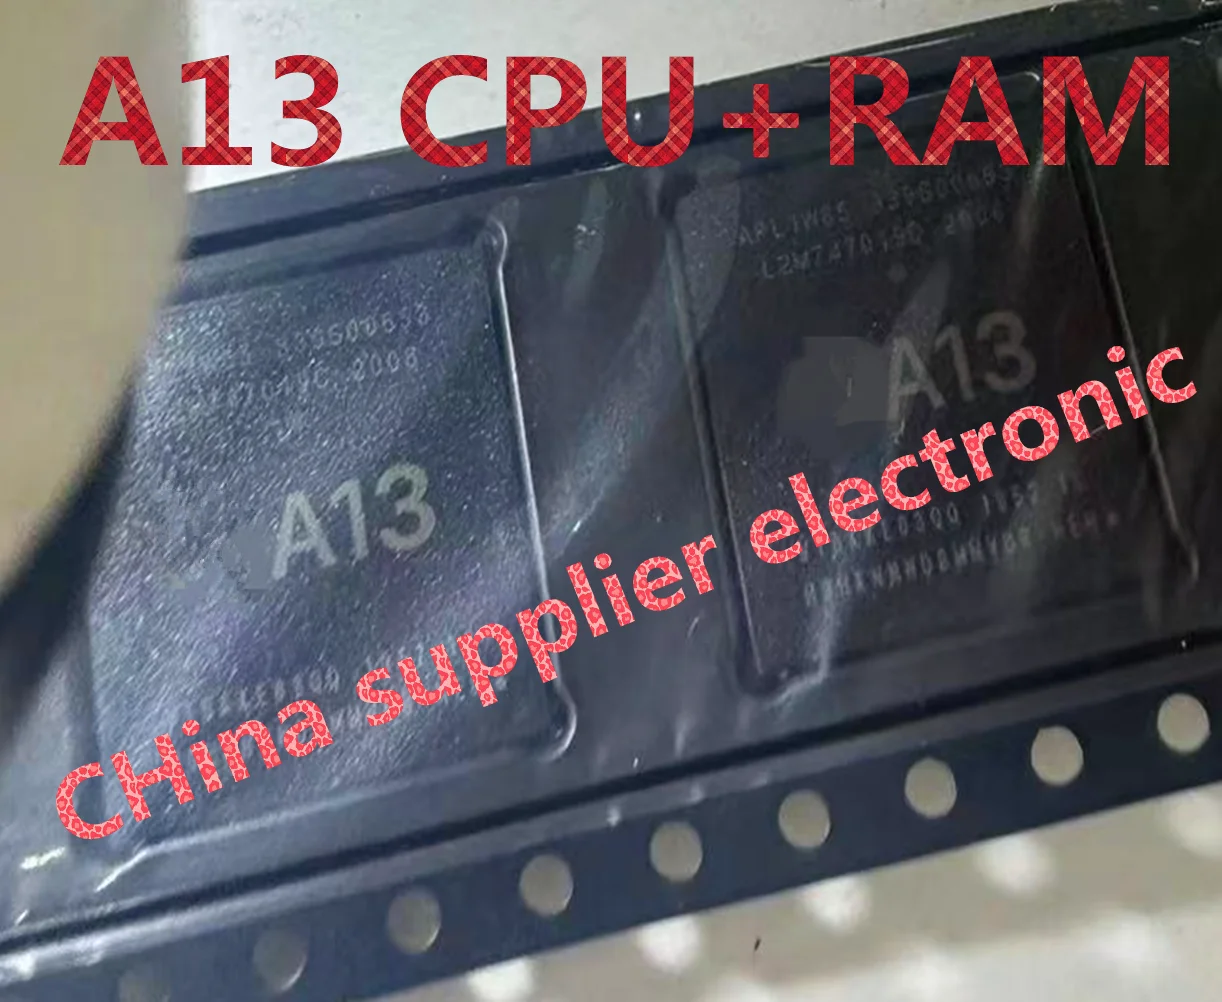  11 11  11 θƽ CPU RAM IC Ĩ Ǯ Ʈ ŰƮ, A13 CPU + RAM, 2  1